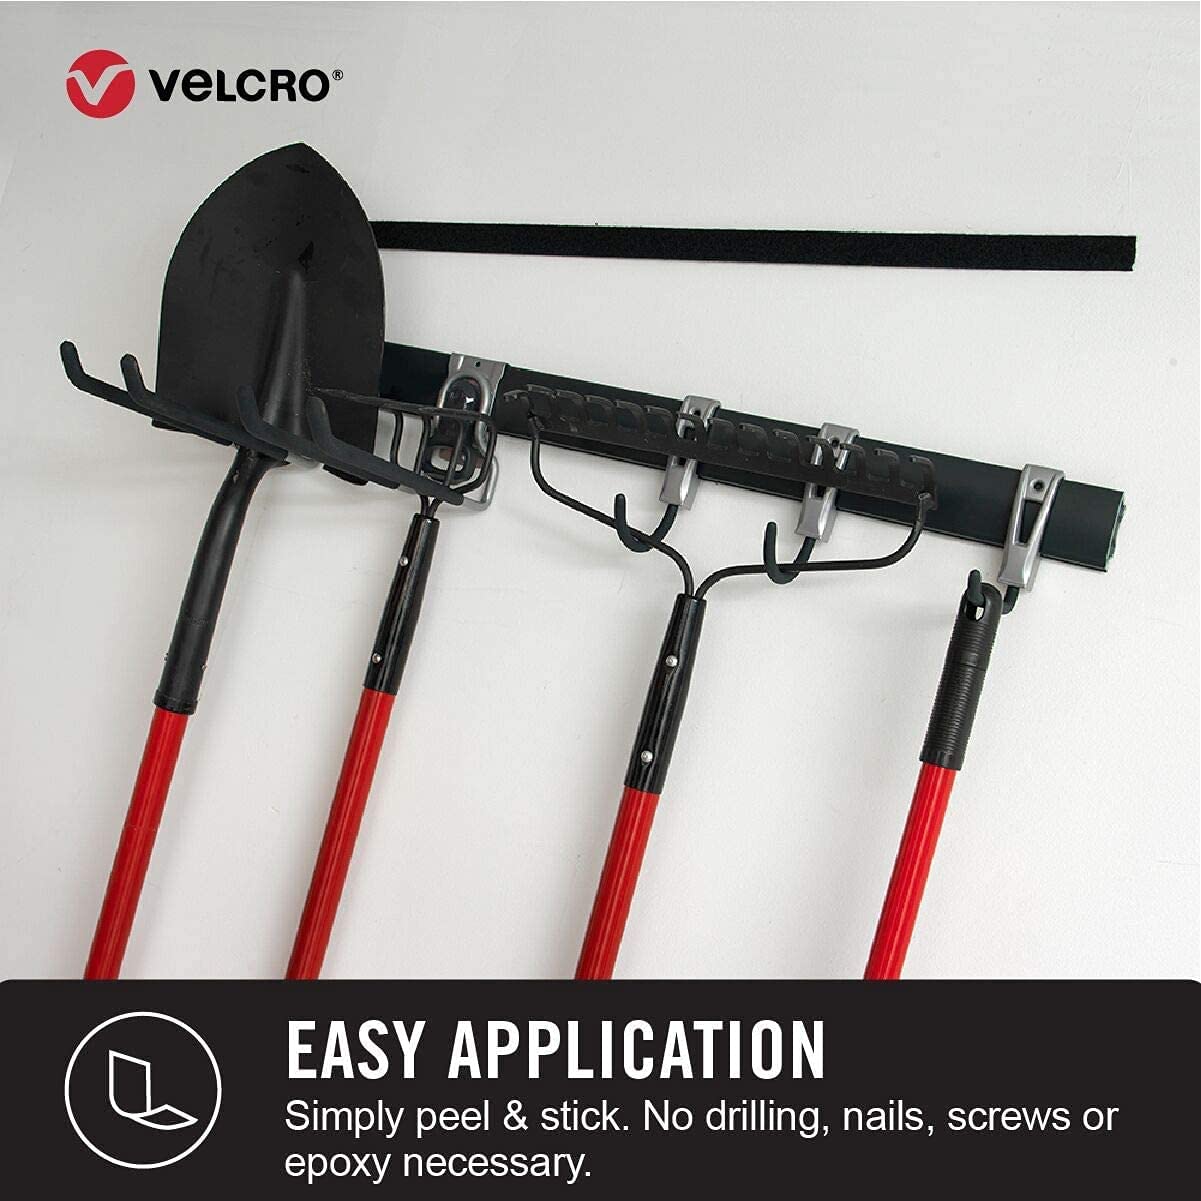 Velcro Brand Industrial Strength 4in x 2in Strips, Black - 3 Ct.